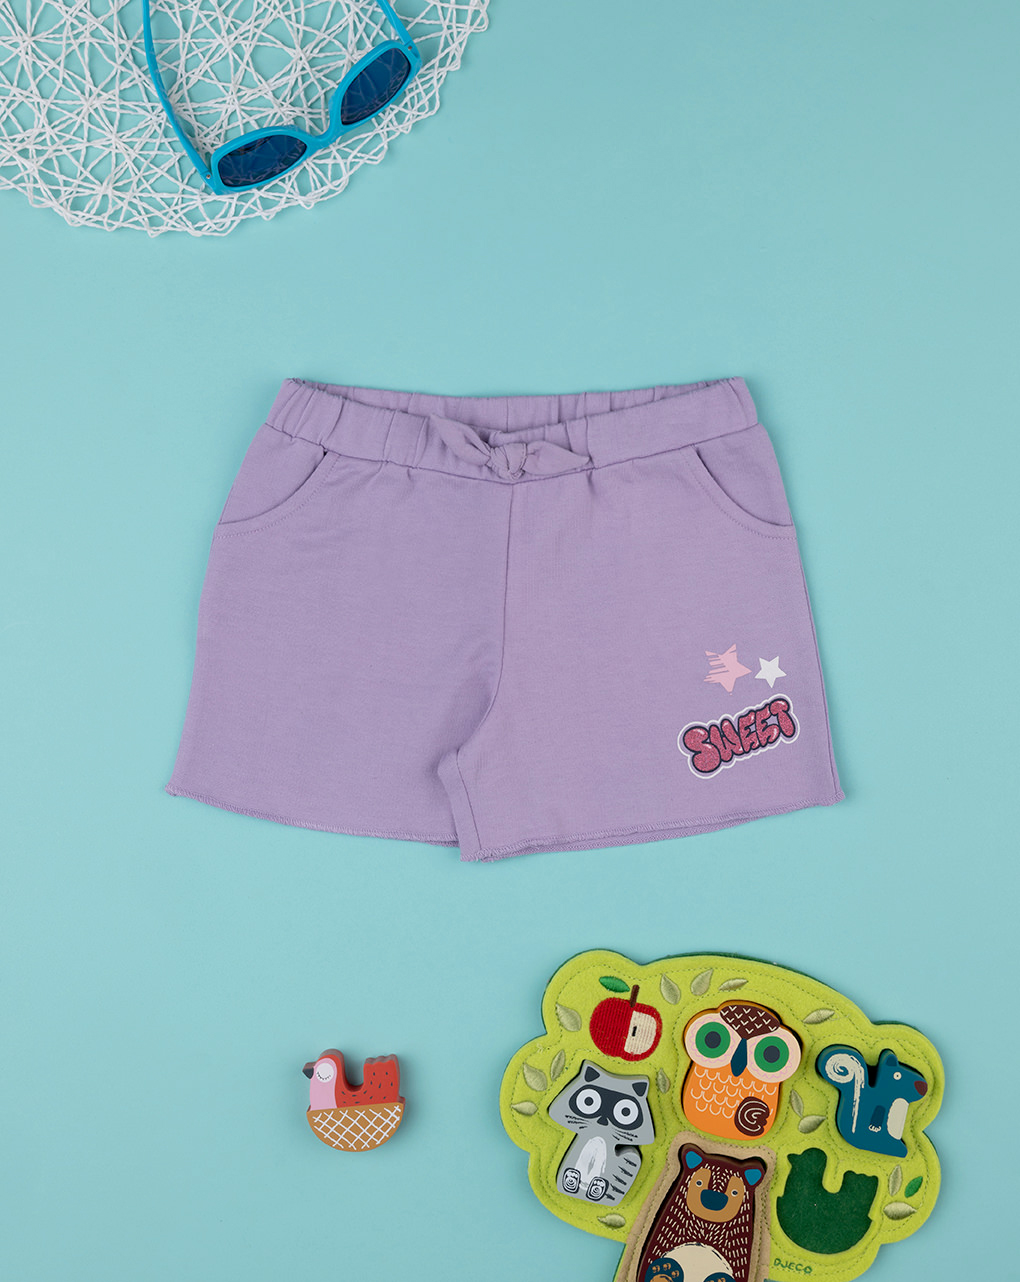 Pantalones cortos niña lila - Prénatal